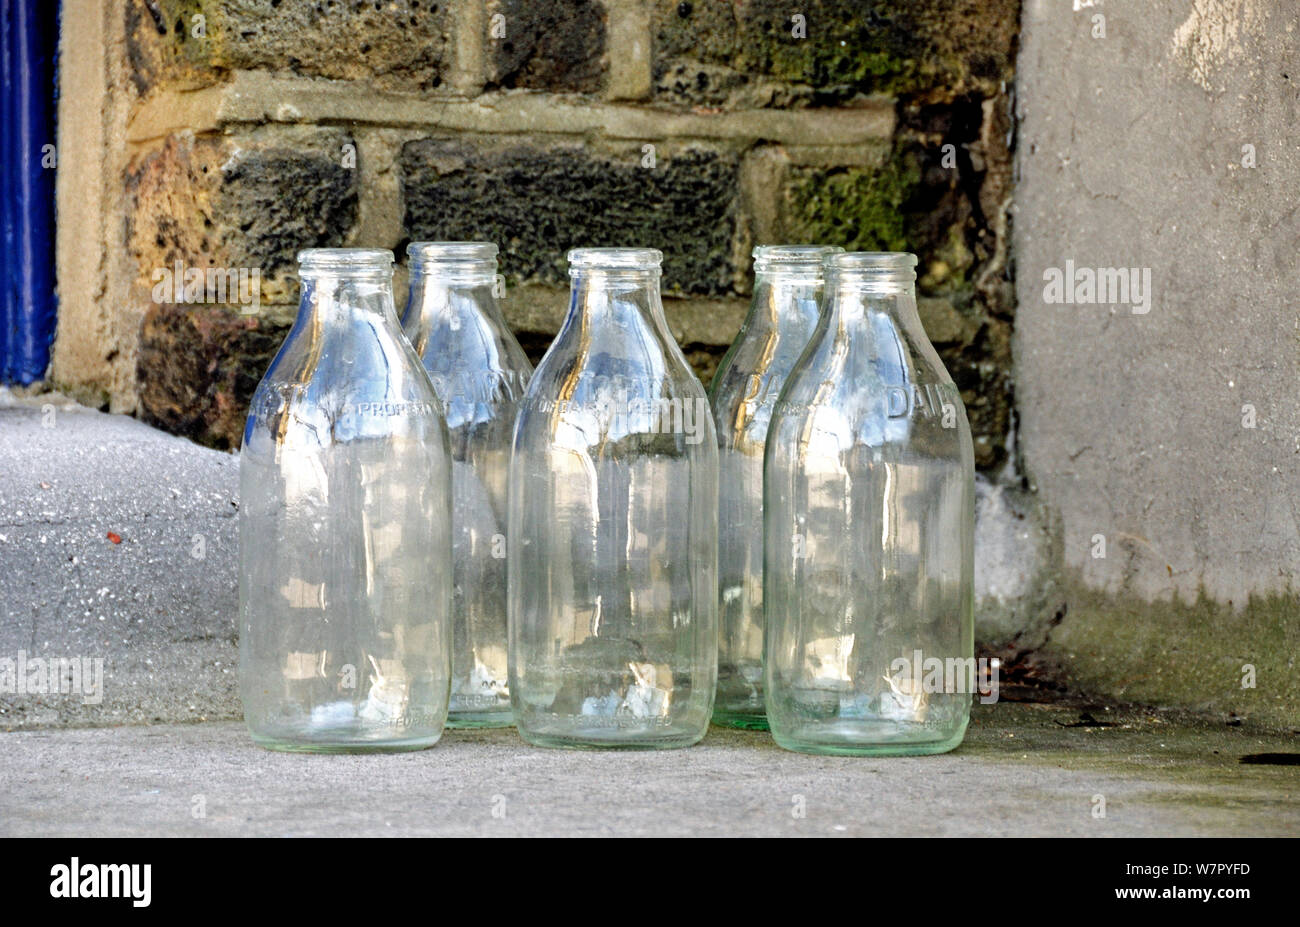 Five empty glass milk bottles on doorstep, Highbury, London Borough of Islington England UK Stock Photo